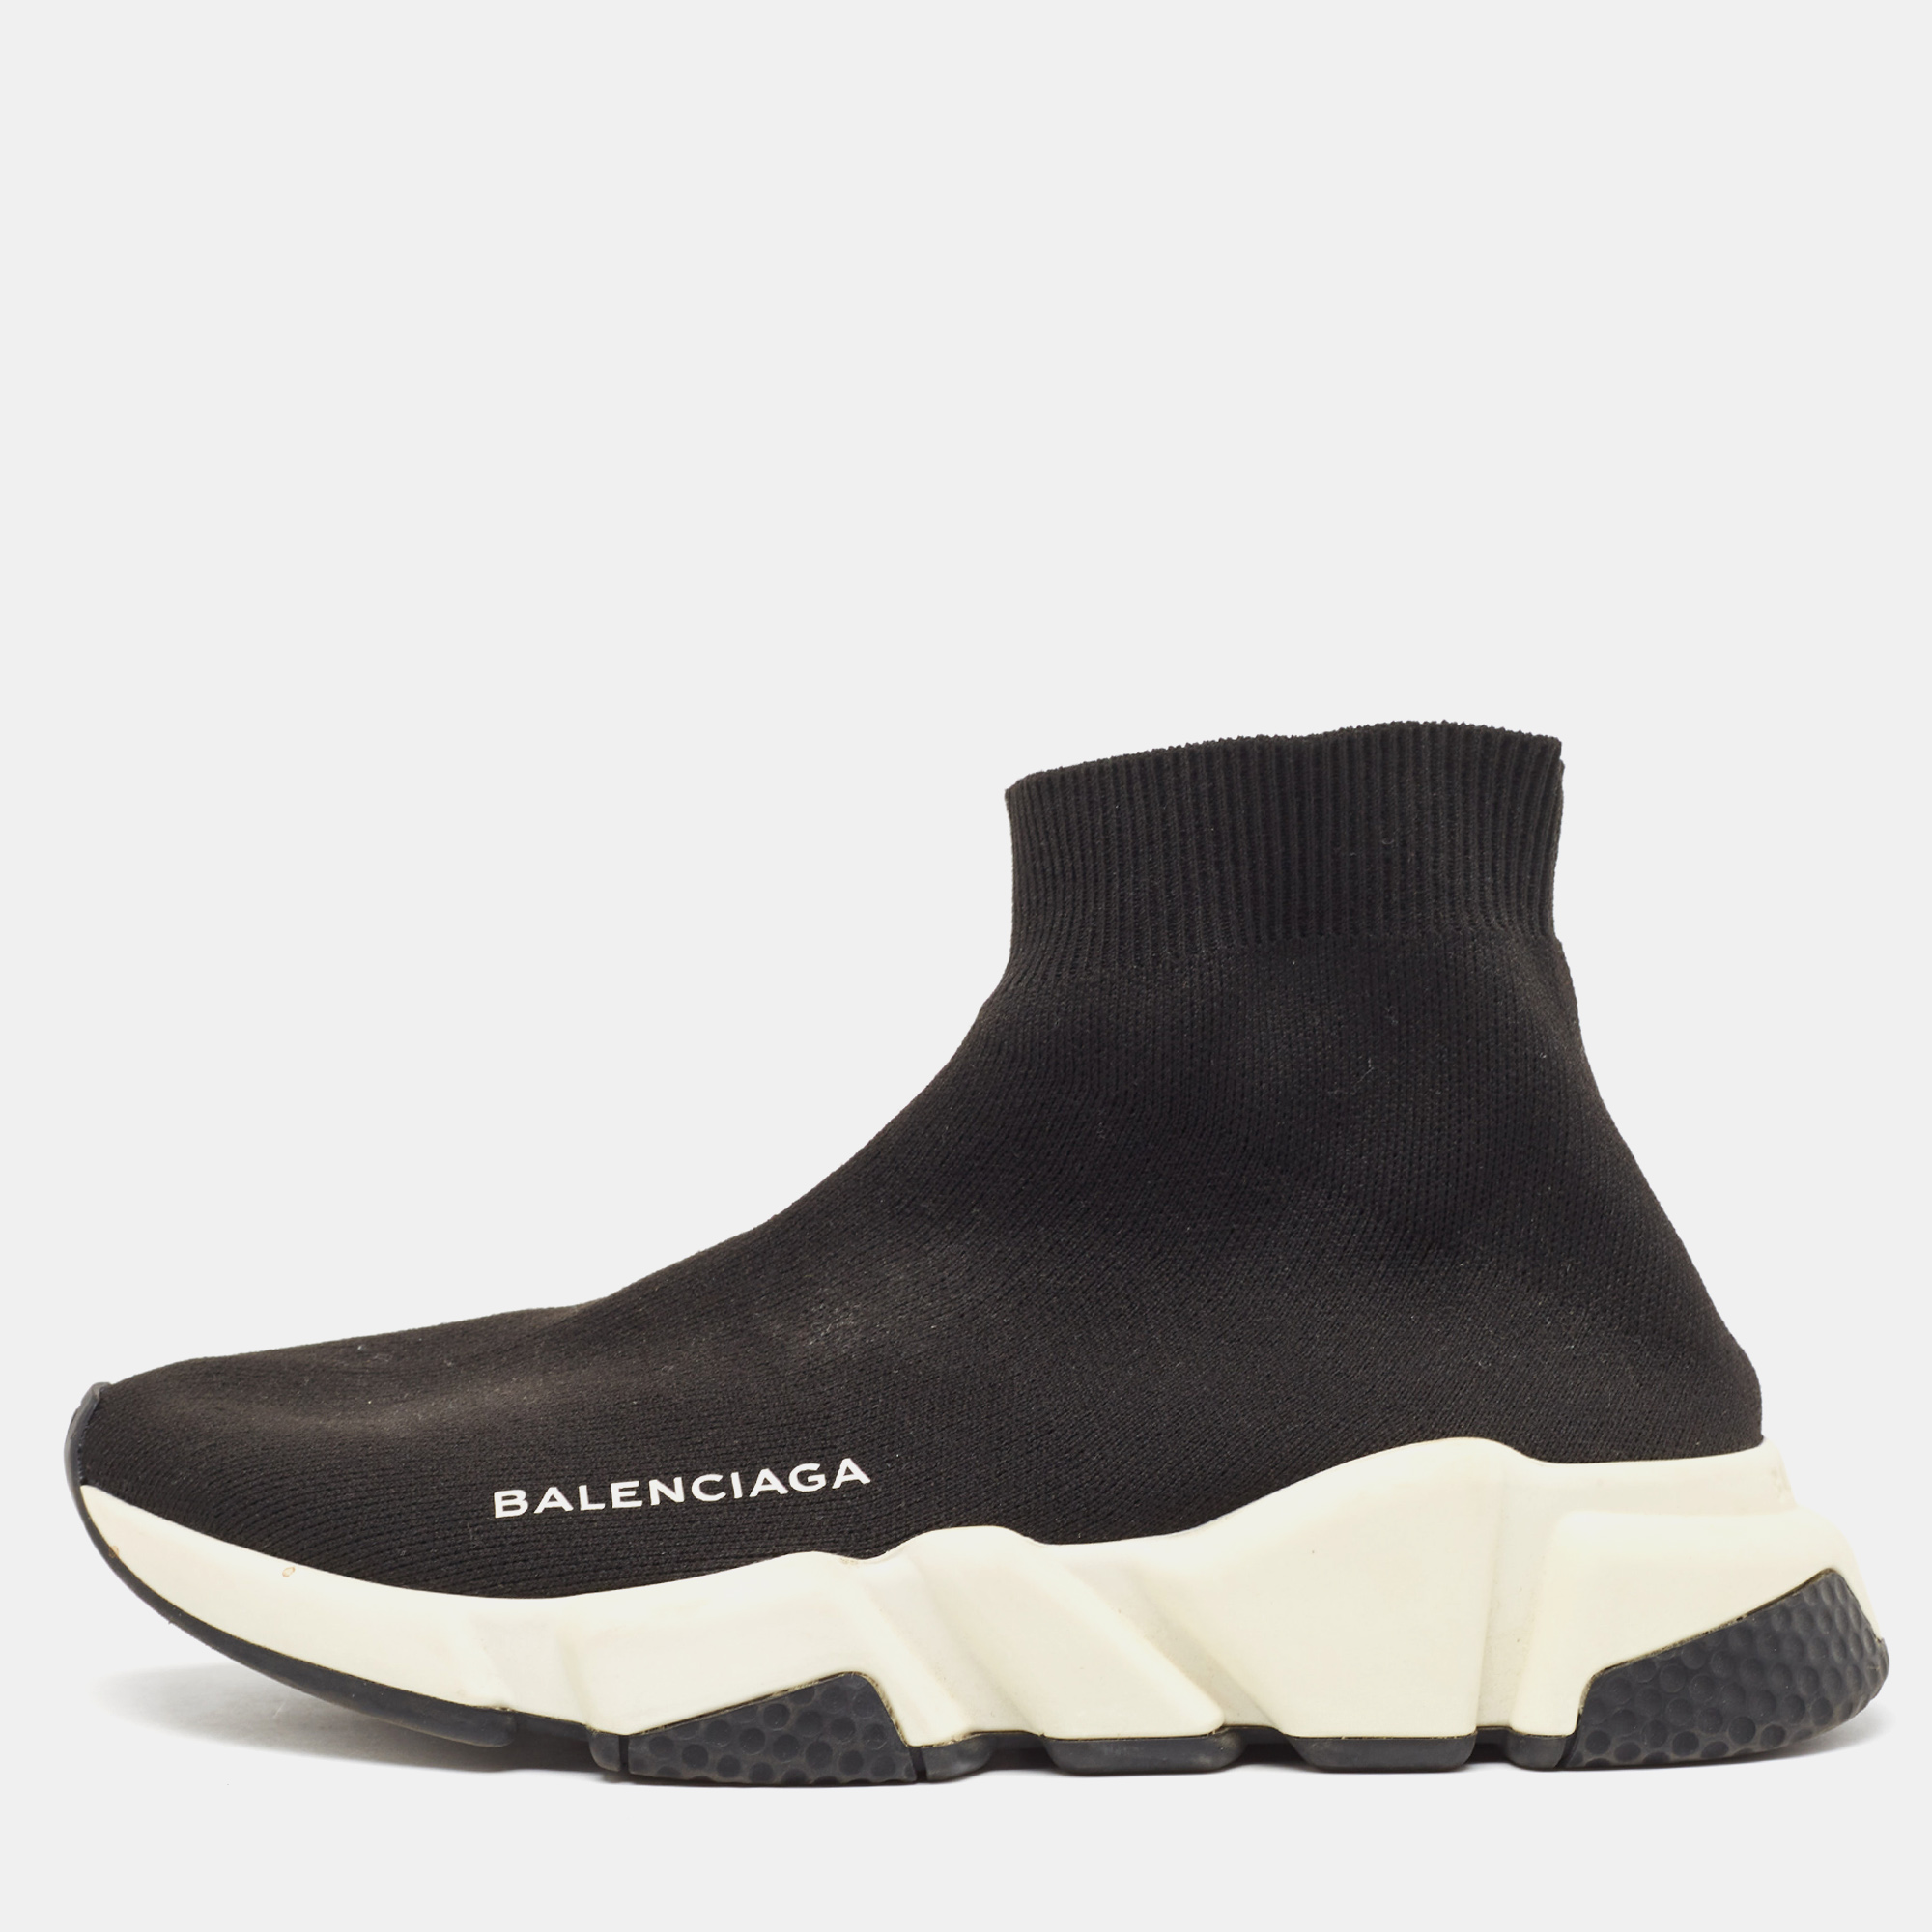 Balenciaga black knit fabric speed sock sneakers size 36